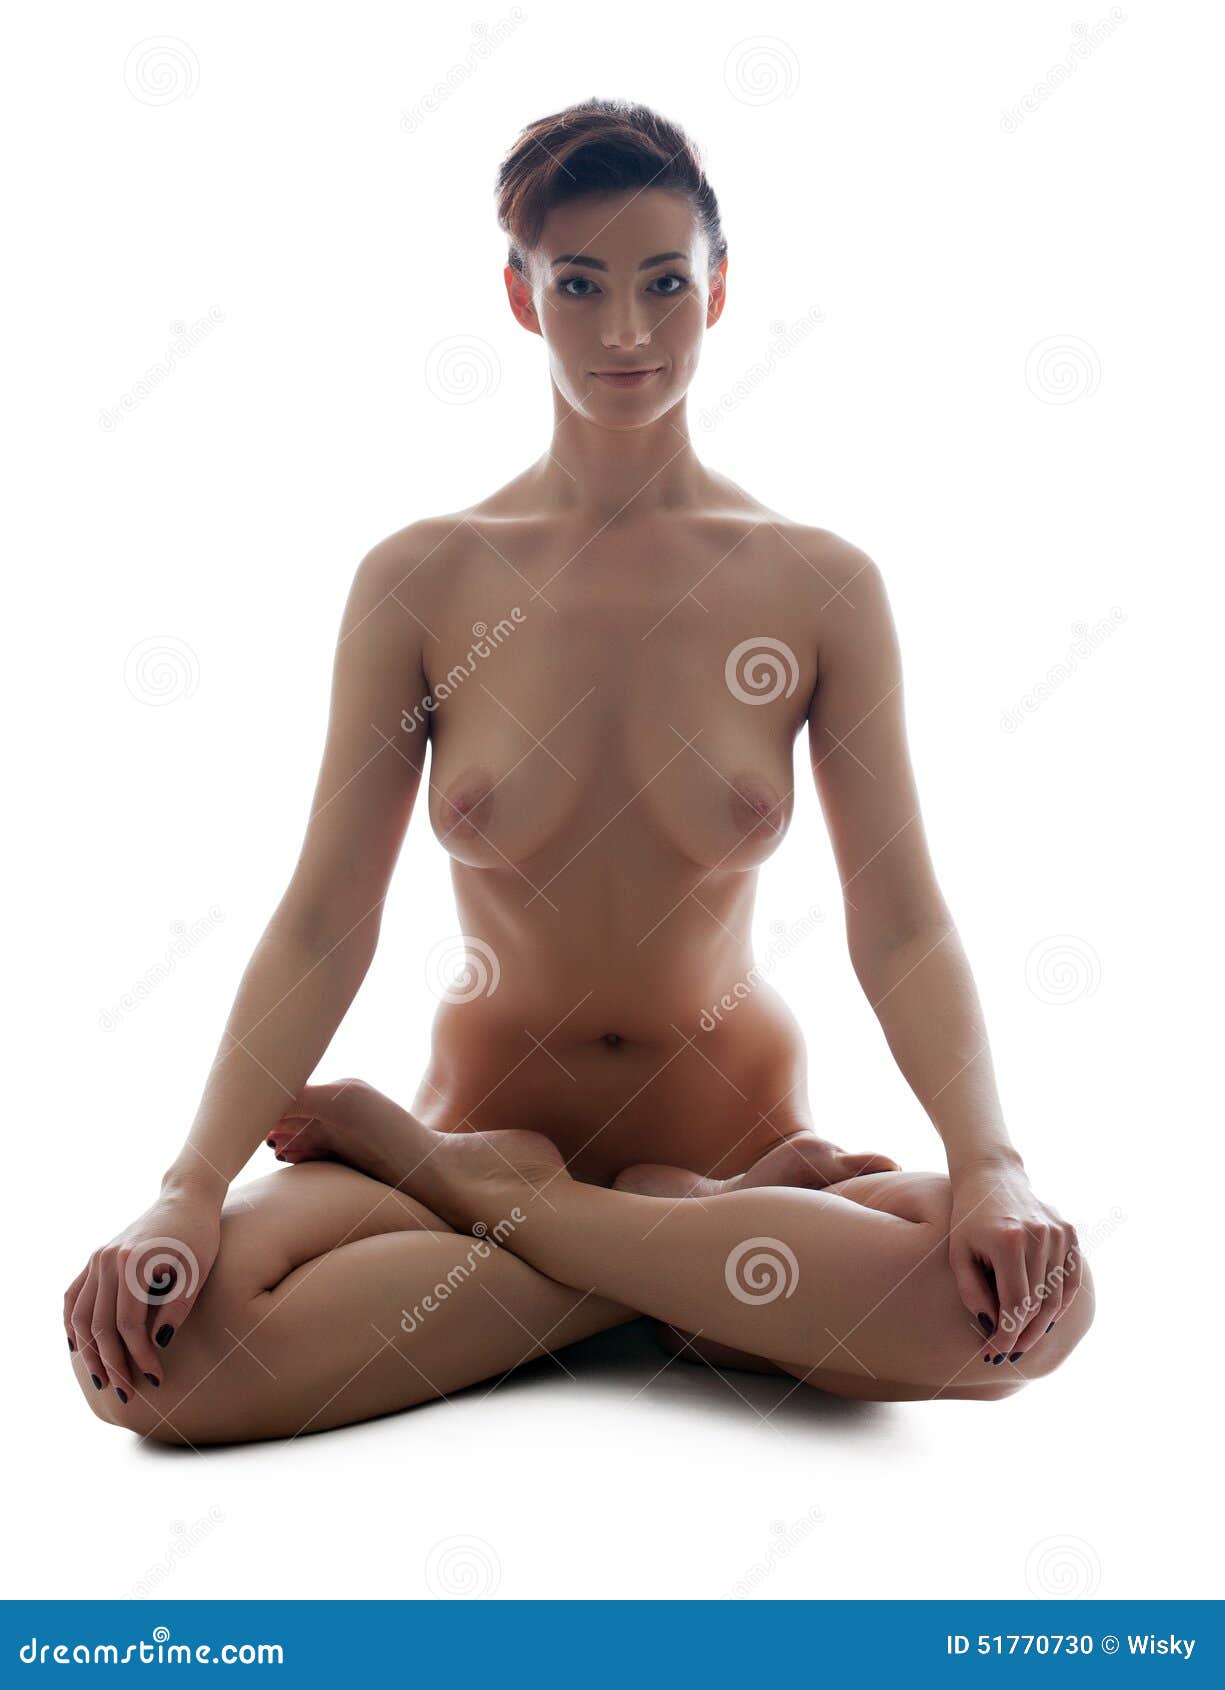 amir kc add photo nude women doing yoga